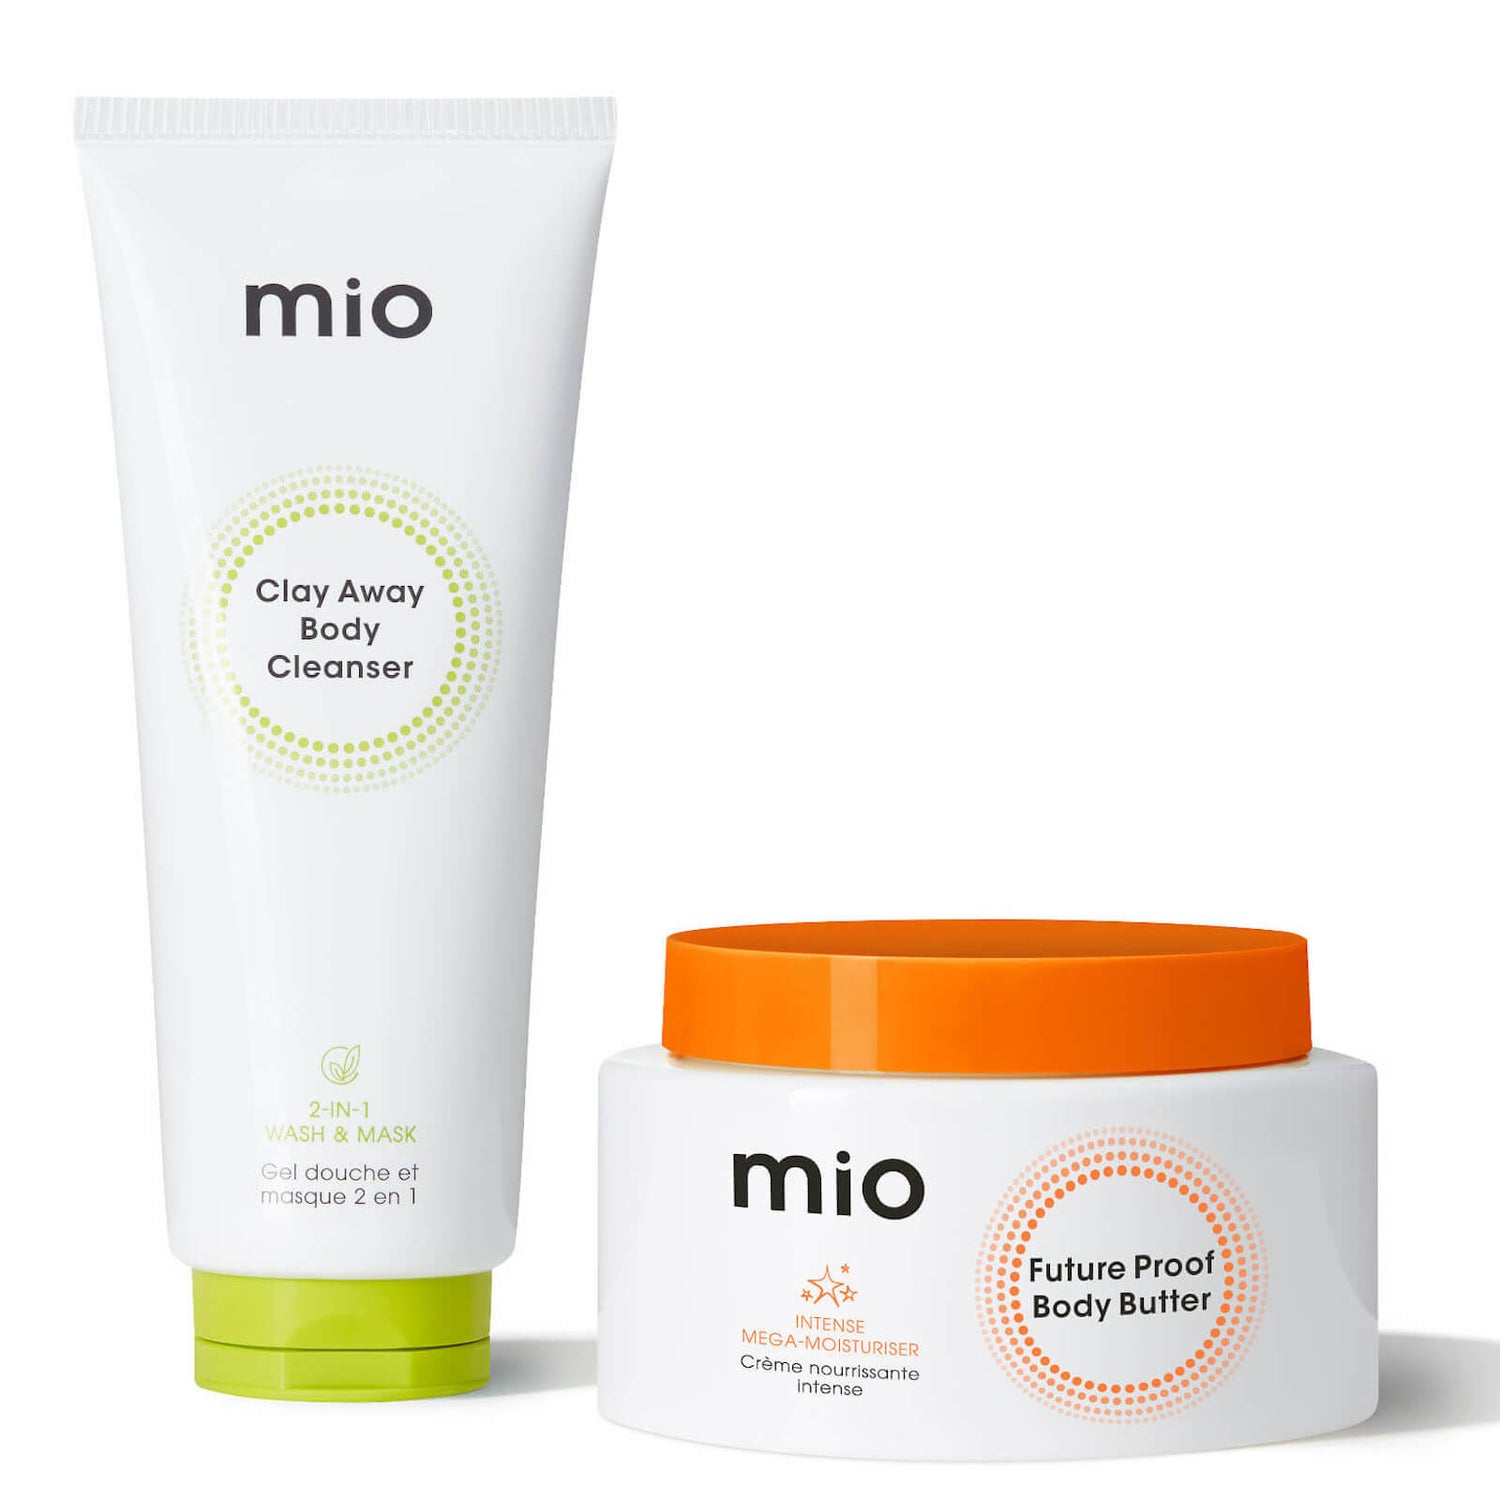 Mio Skincare Purifying Skin Routine Duo (Worth £43.00)